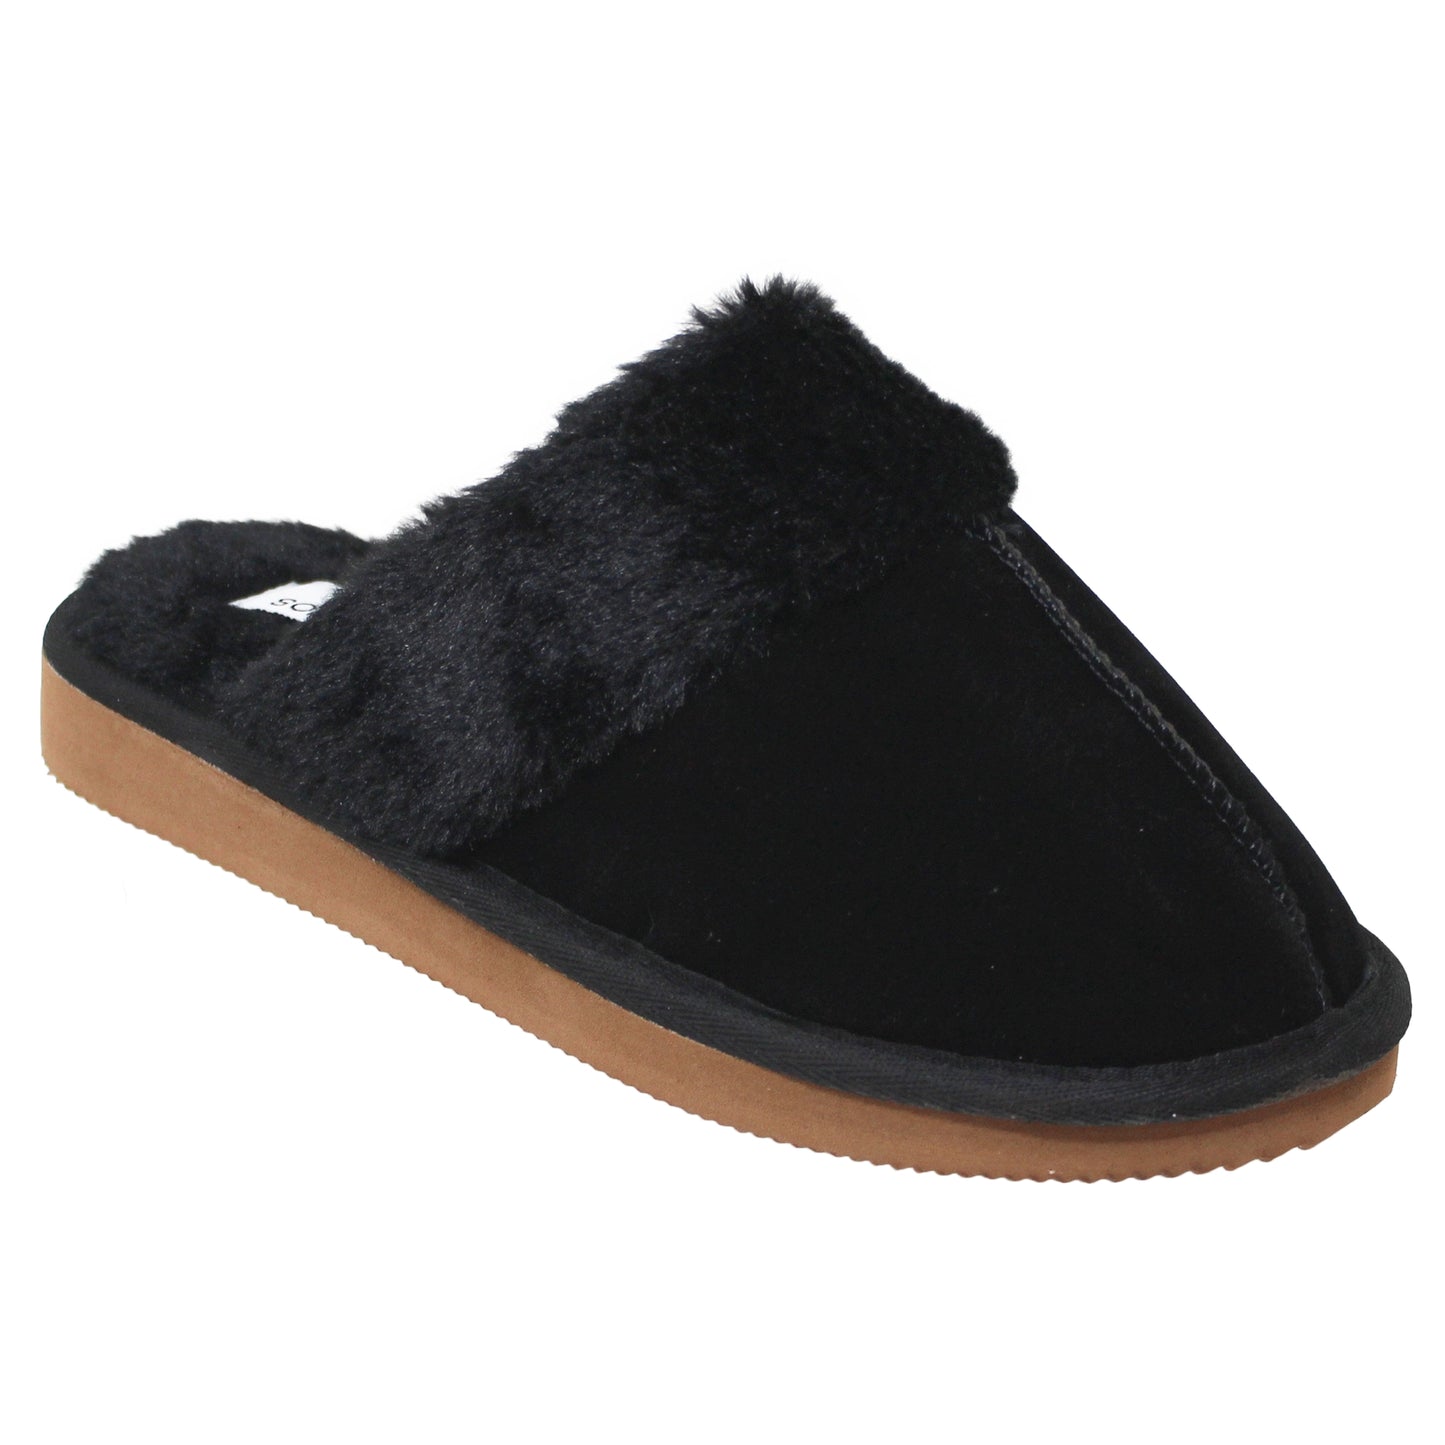 SOBEYO Furry Clog Slippers Indoor/Outdoor Fur Lining Black Suede